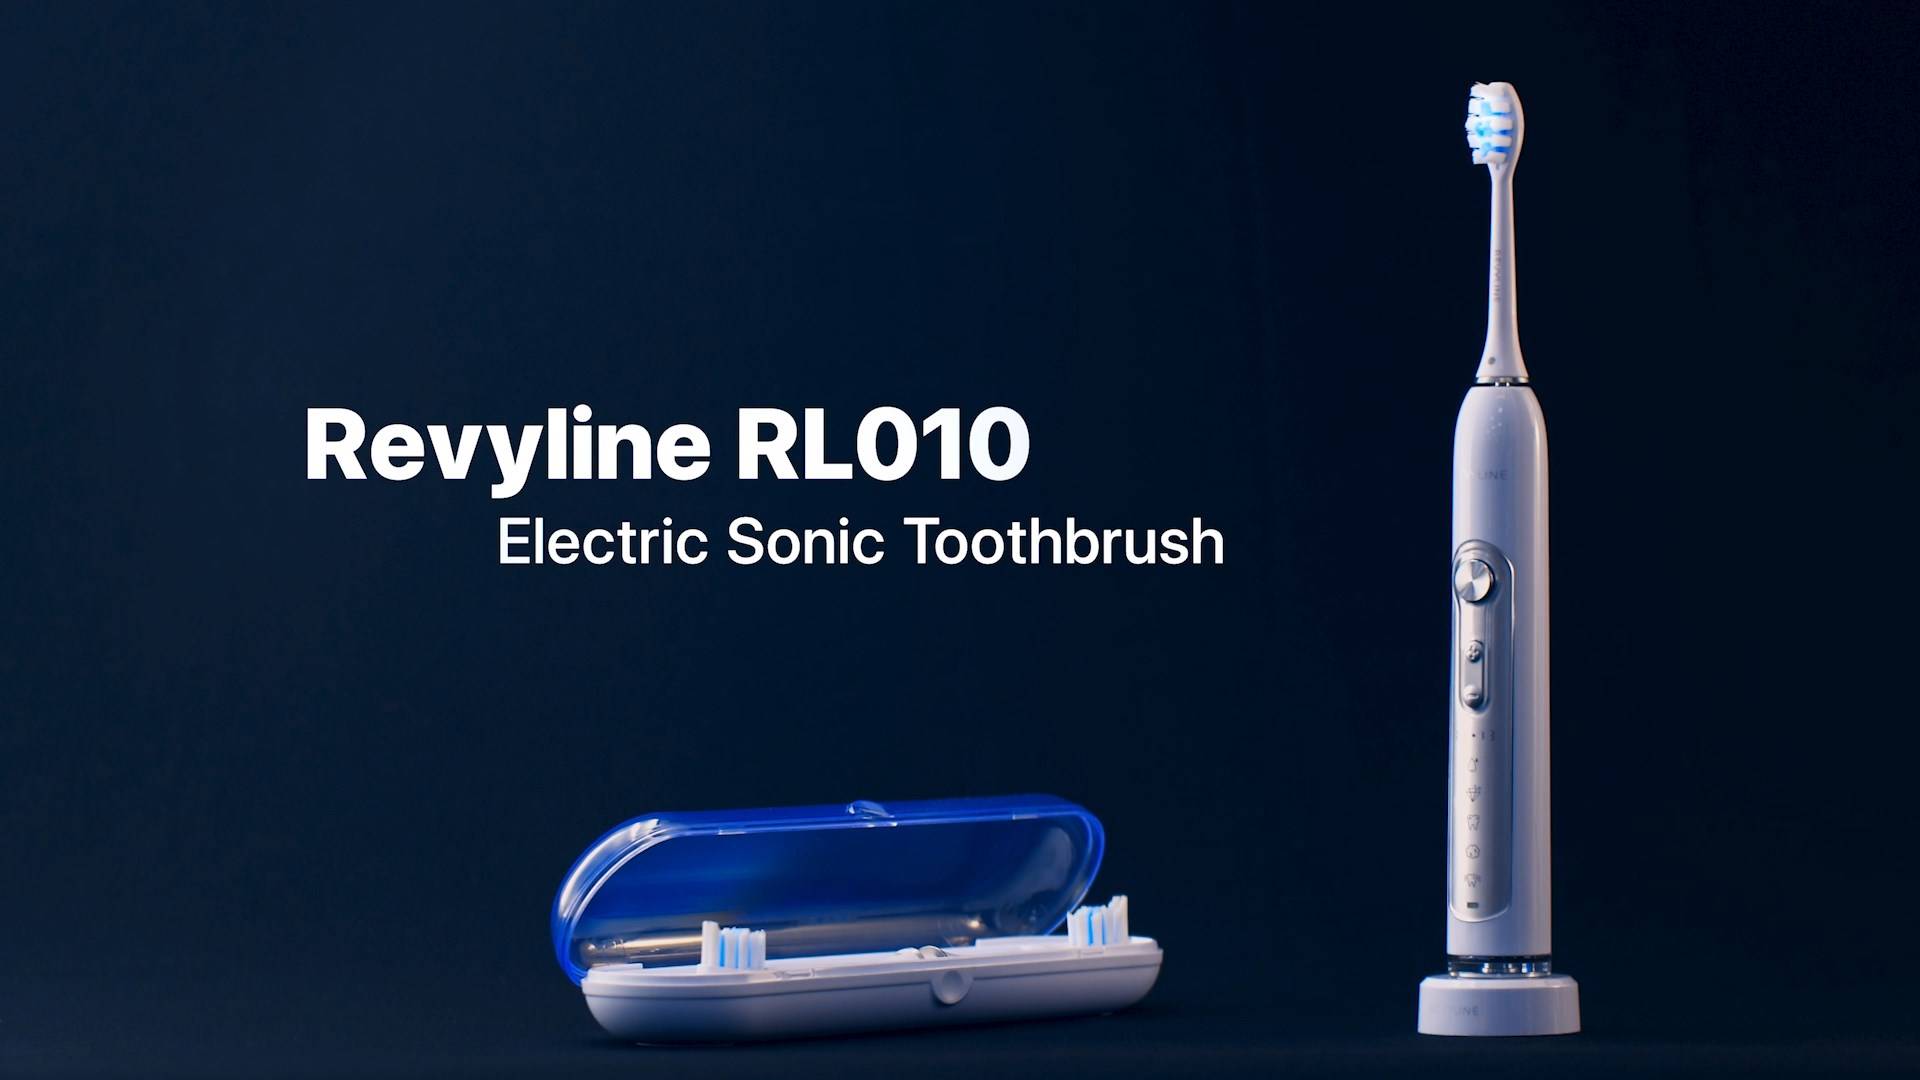 Revyline RL 010 Sonic Electric Toothbrush